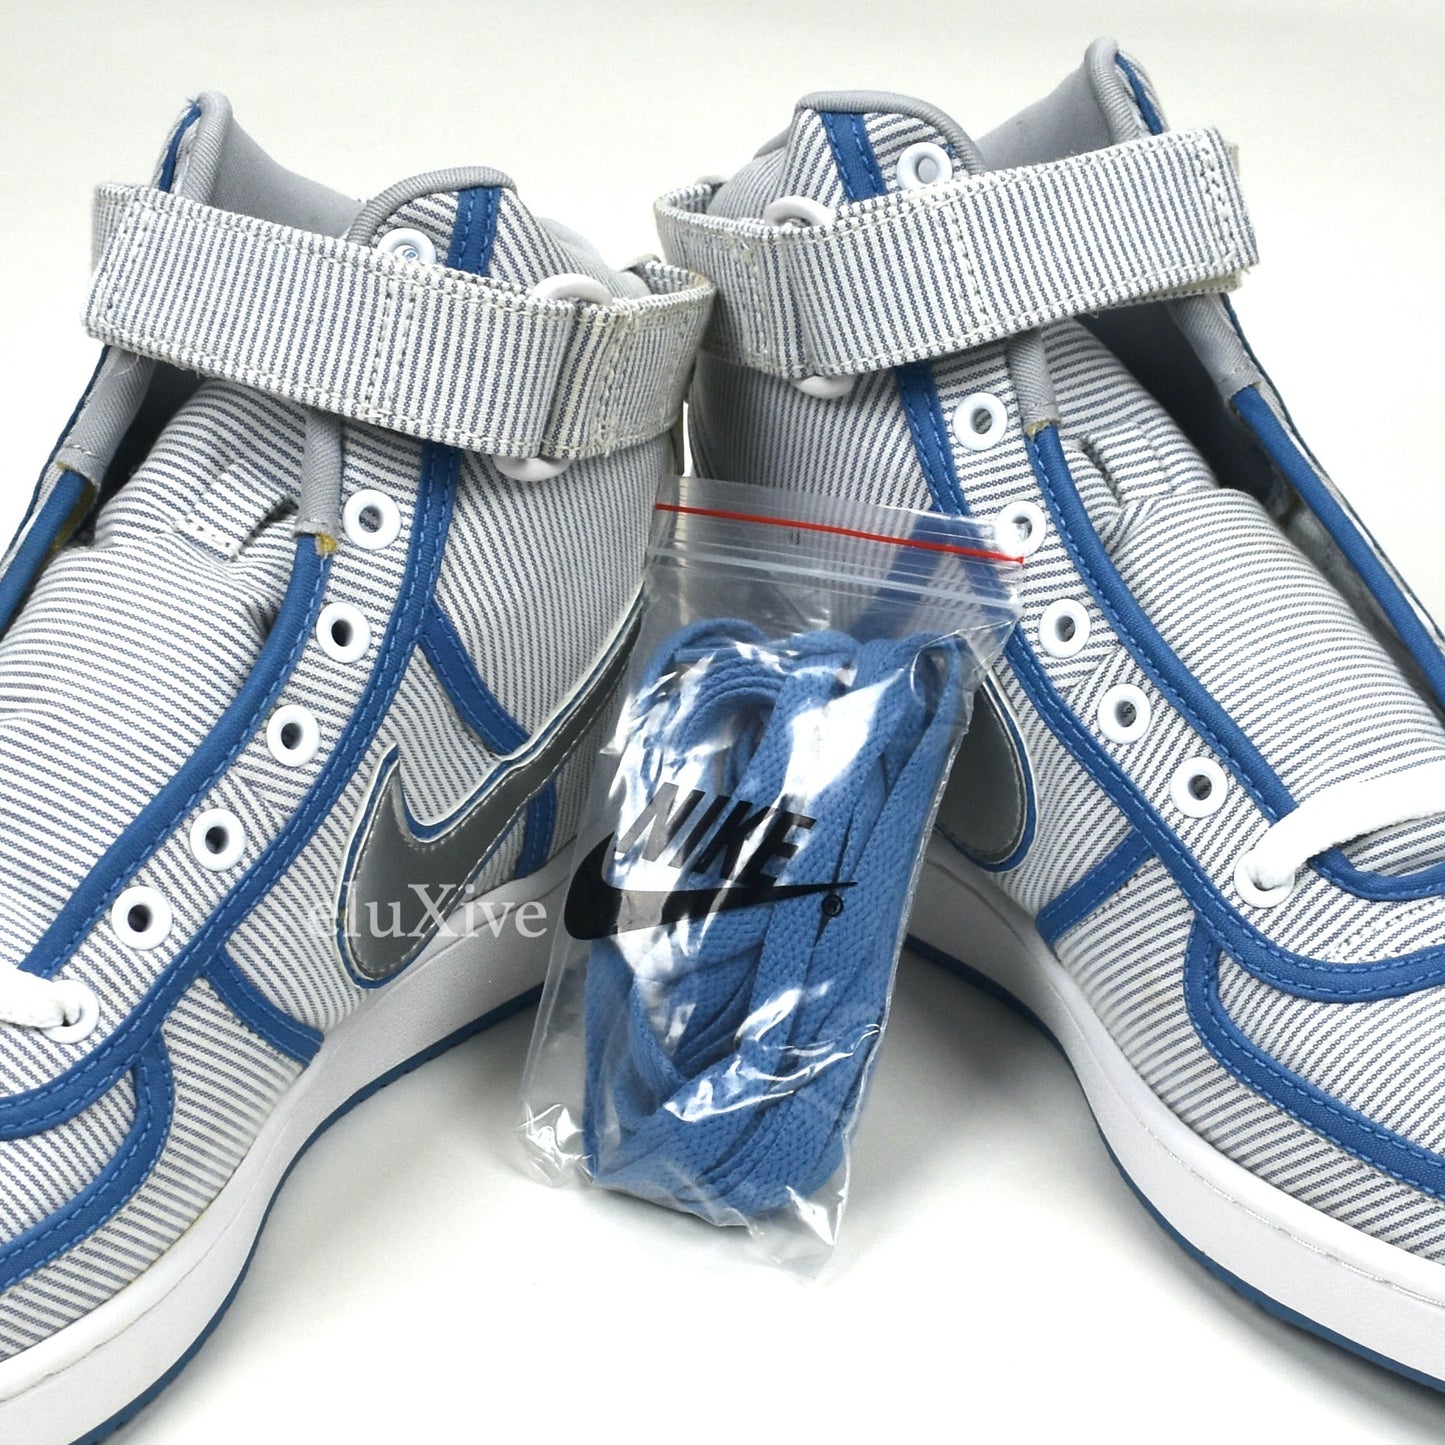 Nike - Vandal High Supreme Geoff McFetridge 'Tear Away' (Blue)